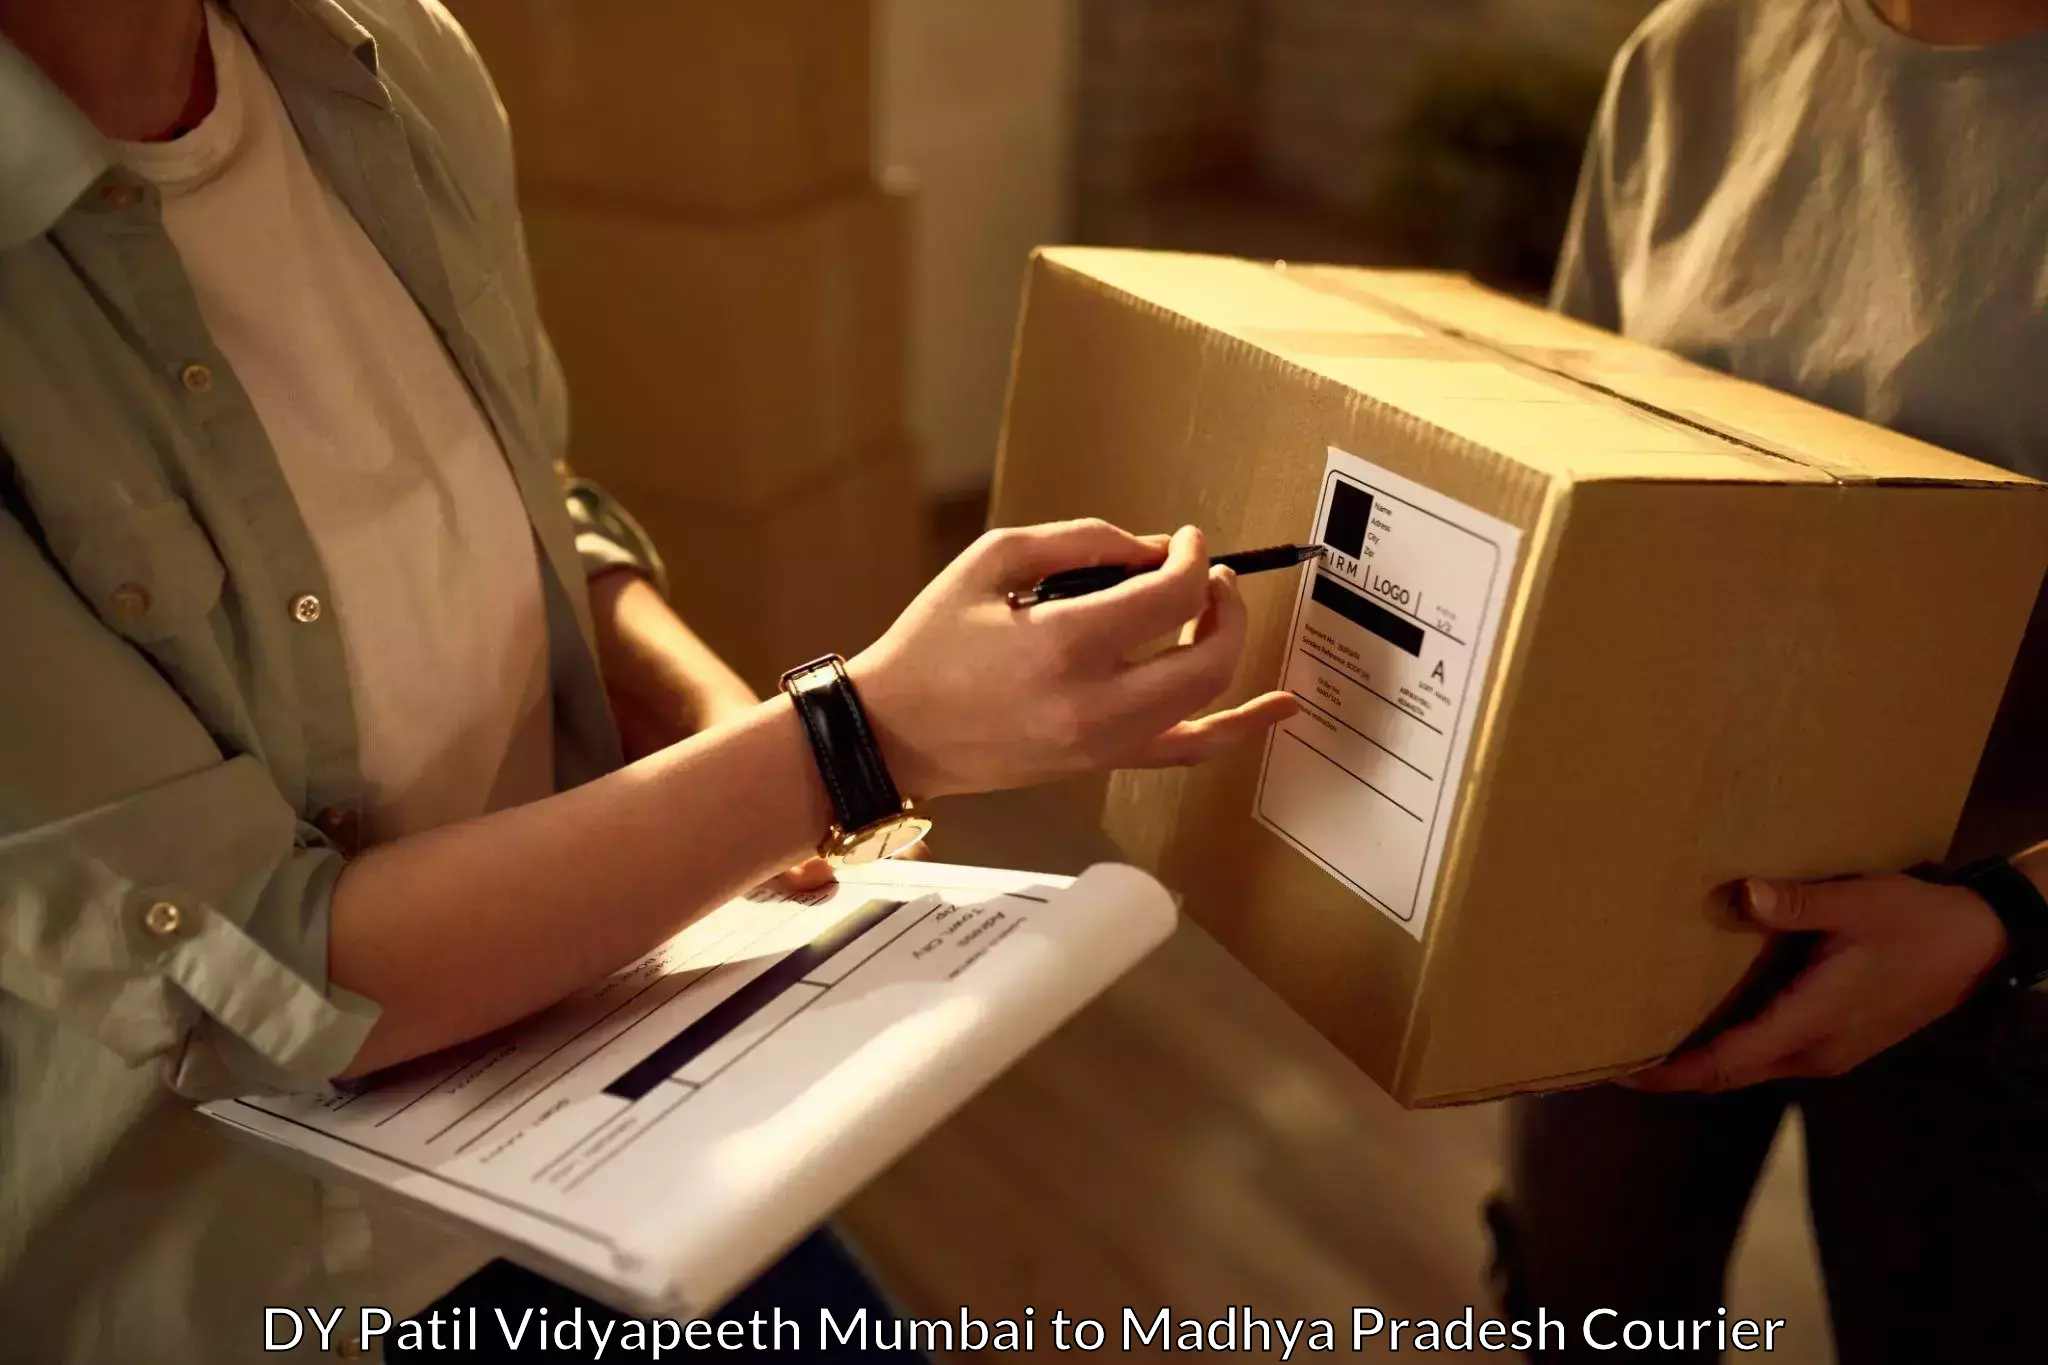 Fast delivery service DY Patil Vidyapeeth Mumbai to Madhya Pradesh